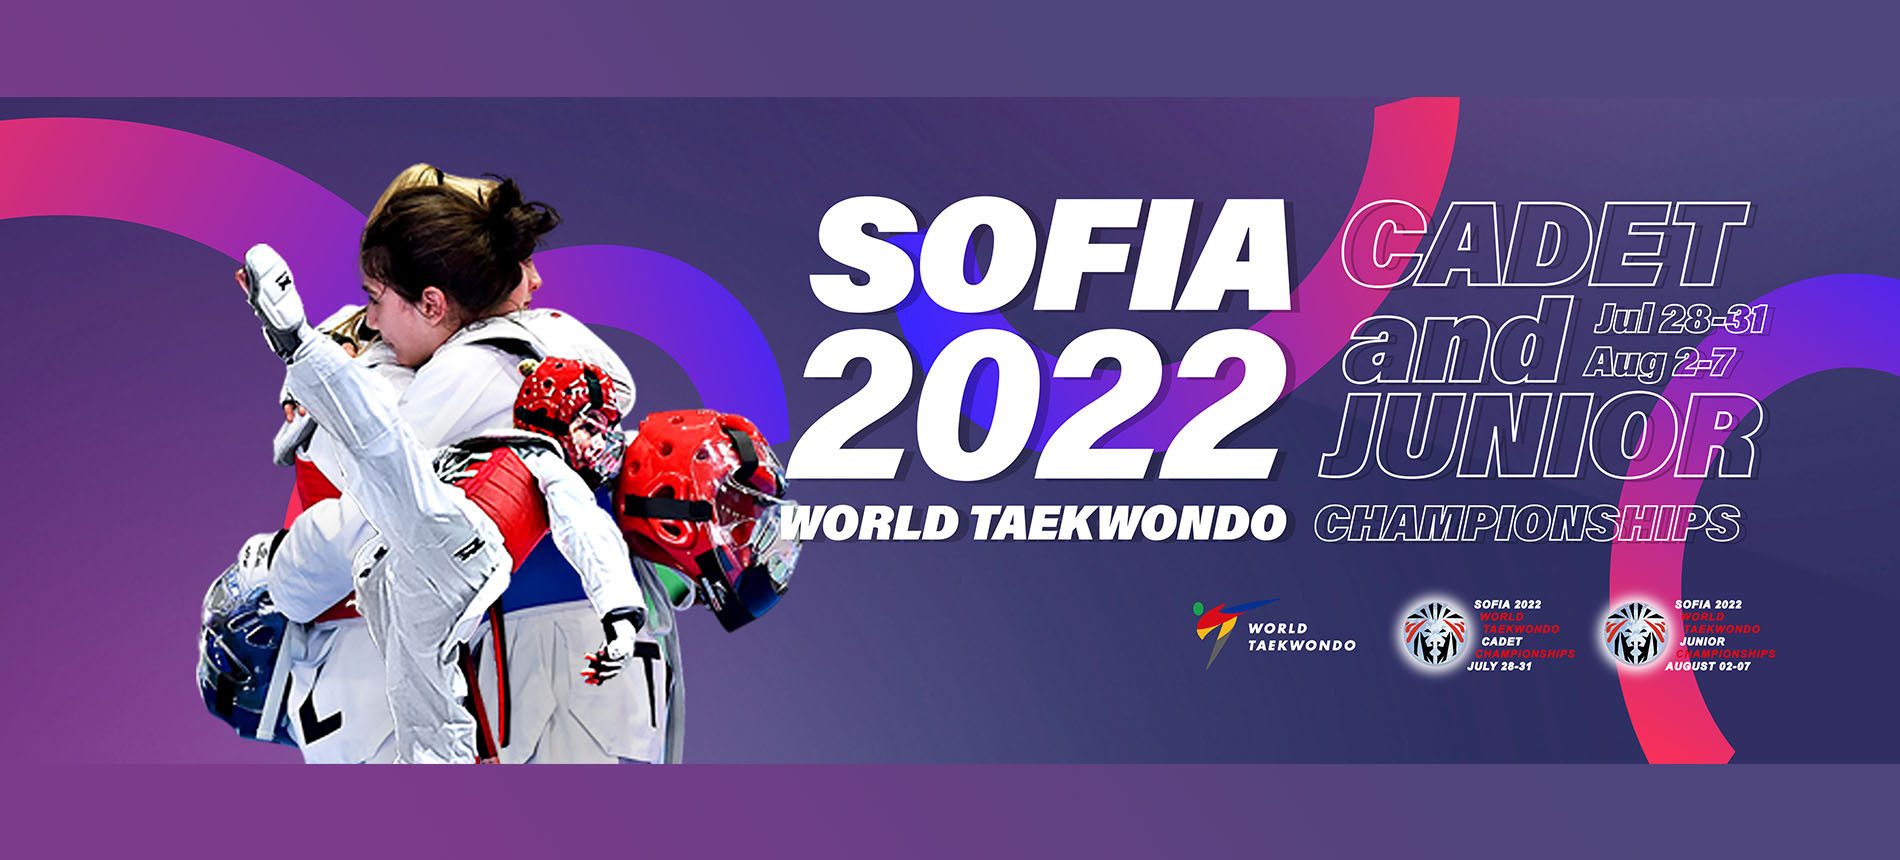 Sofia ready to host 2022 World Taekwondo Cadet & Junior Championships